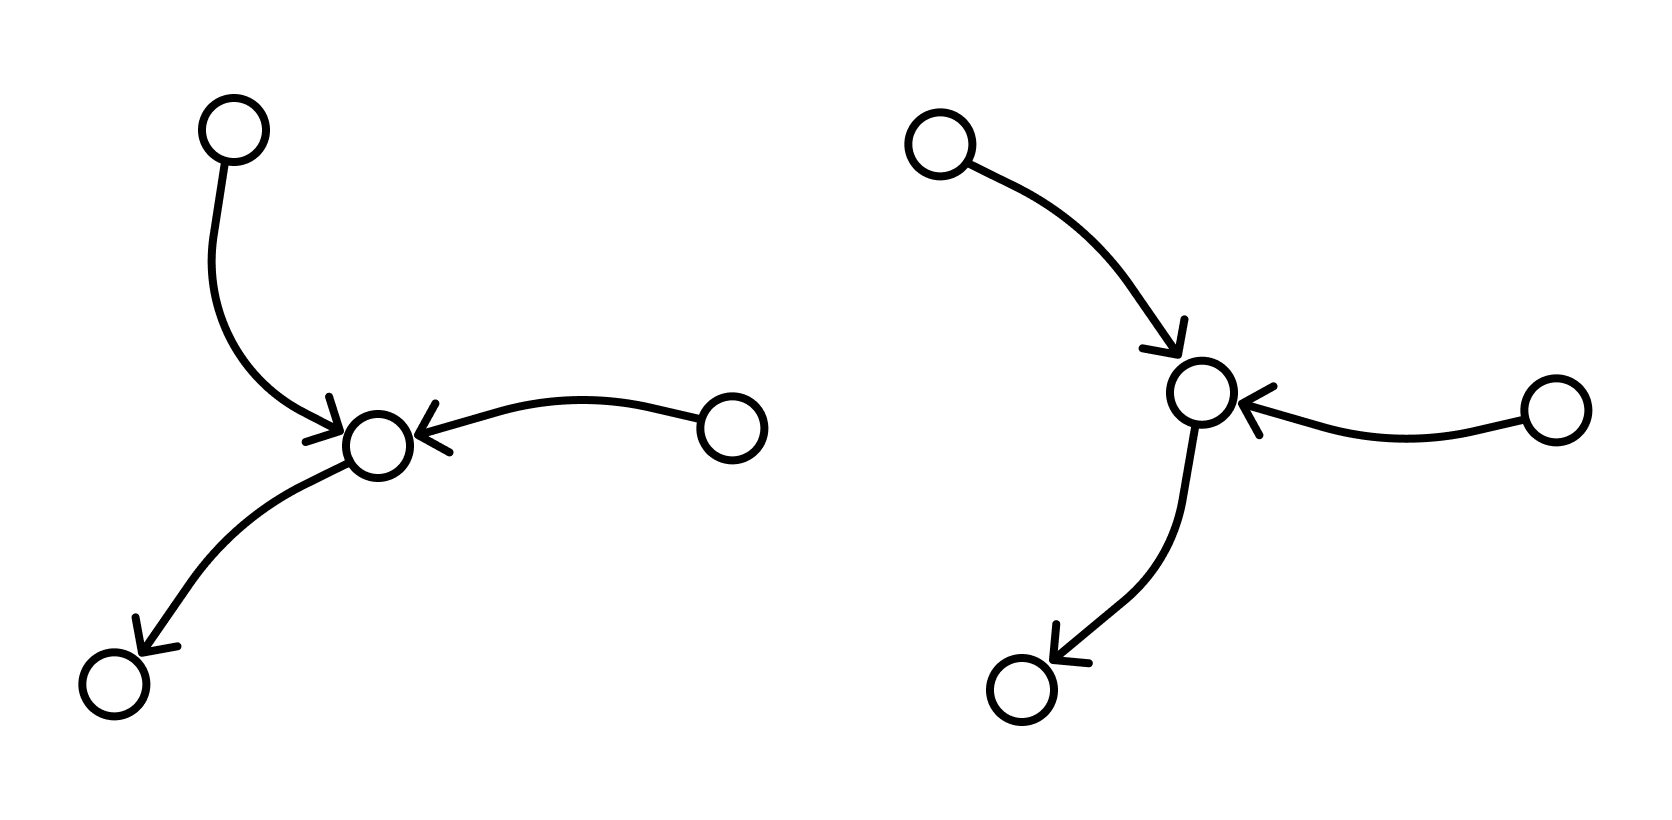 Цикл (теория графов). Графы цепи. Цепь графов.